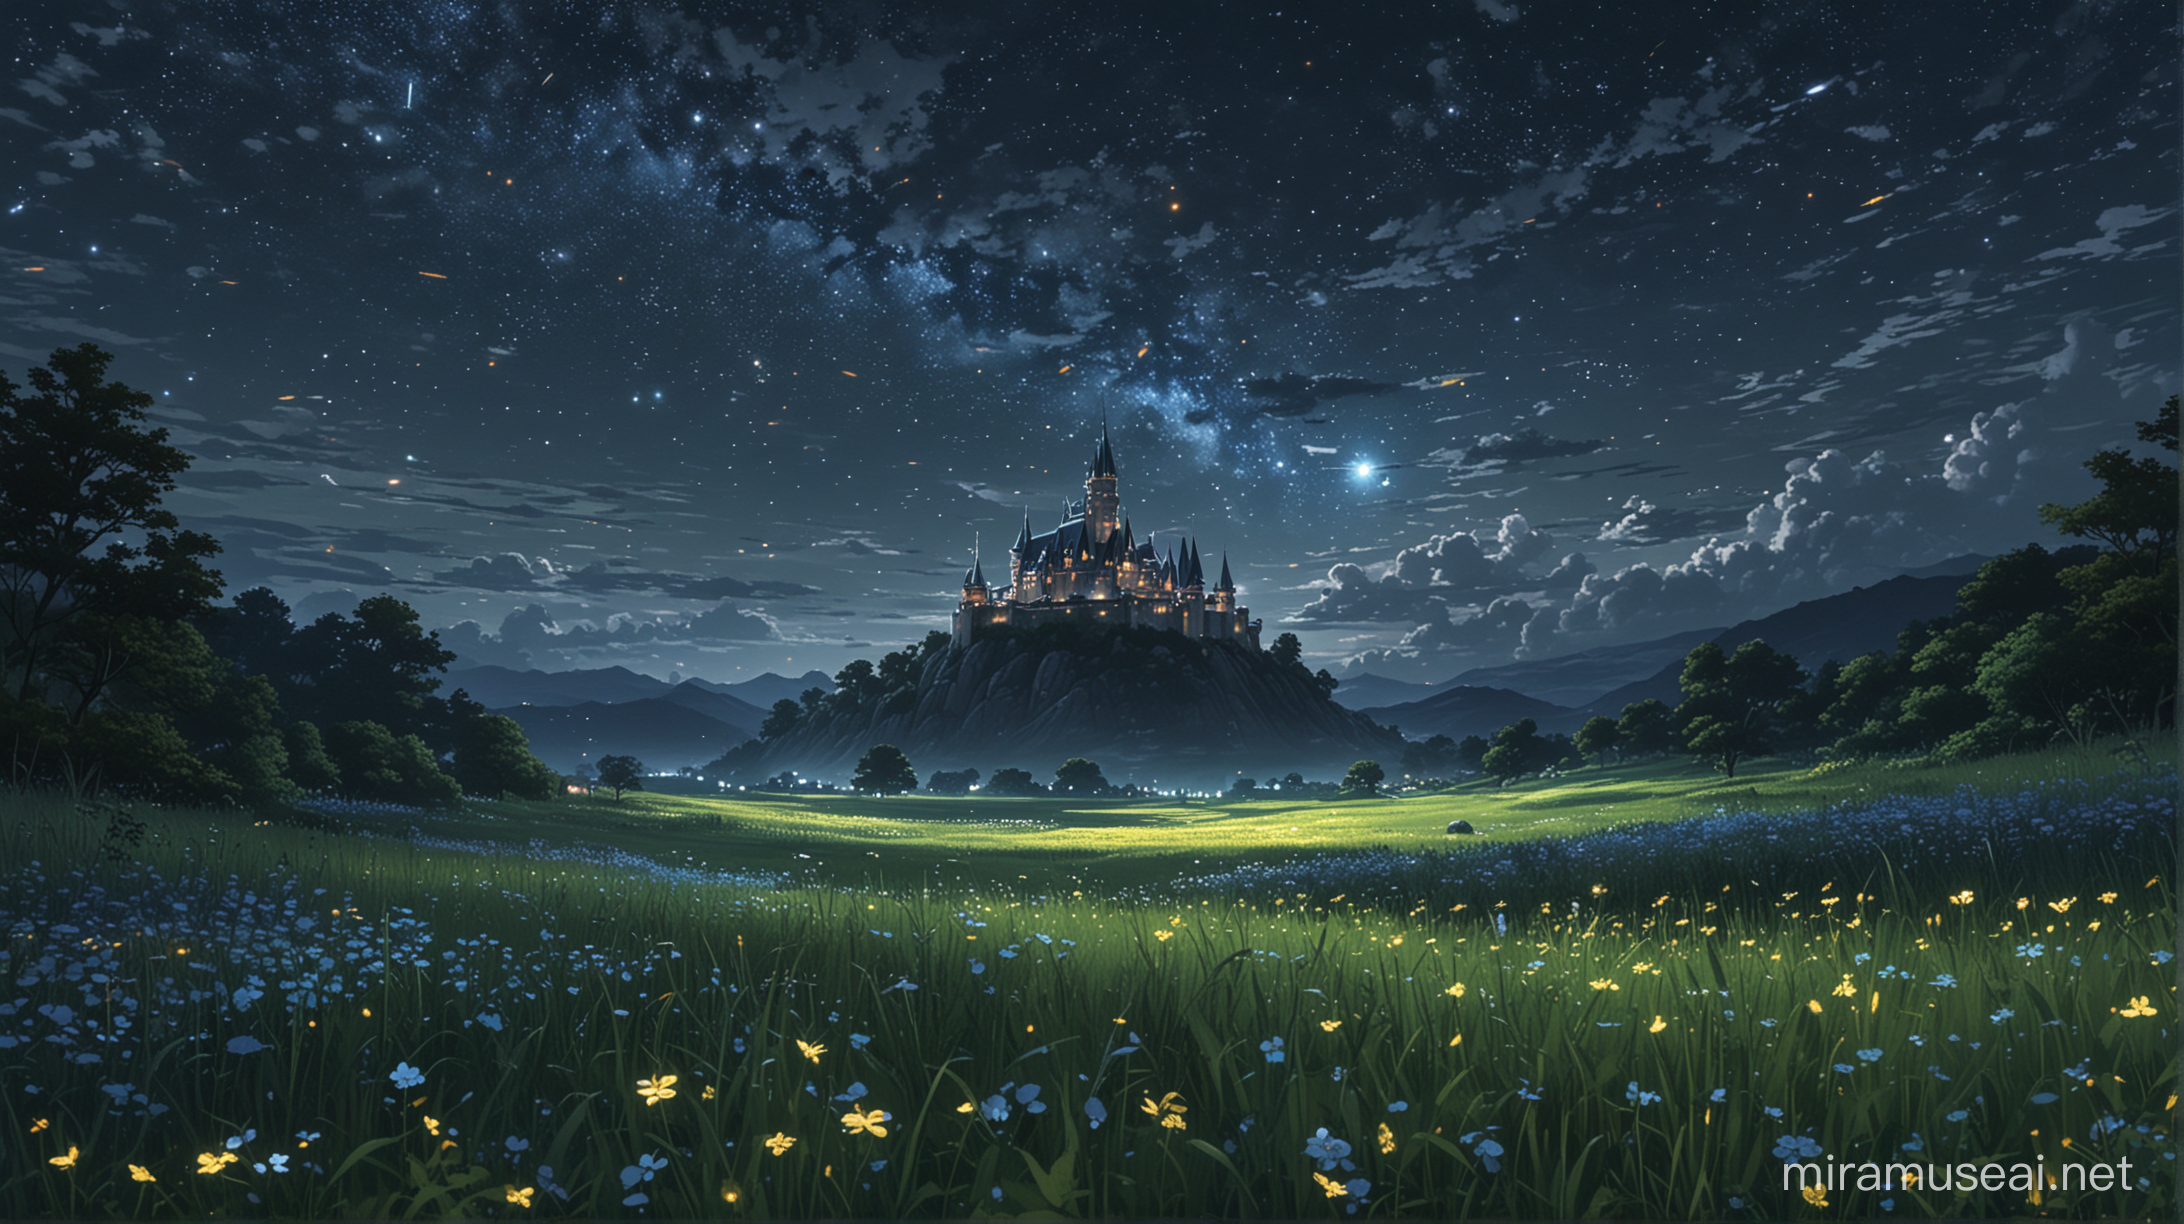 Majestic Castle and Fireflies Illuminating Night Sky